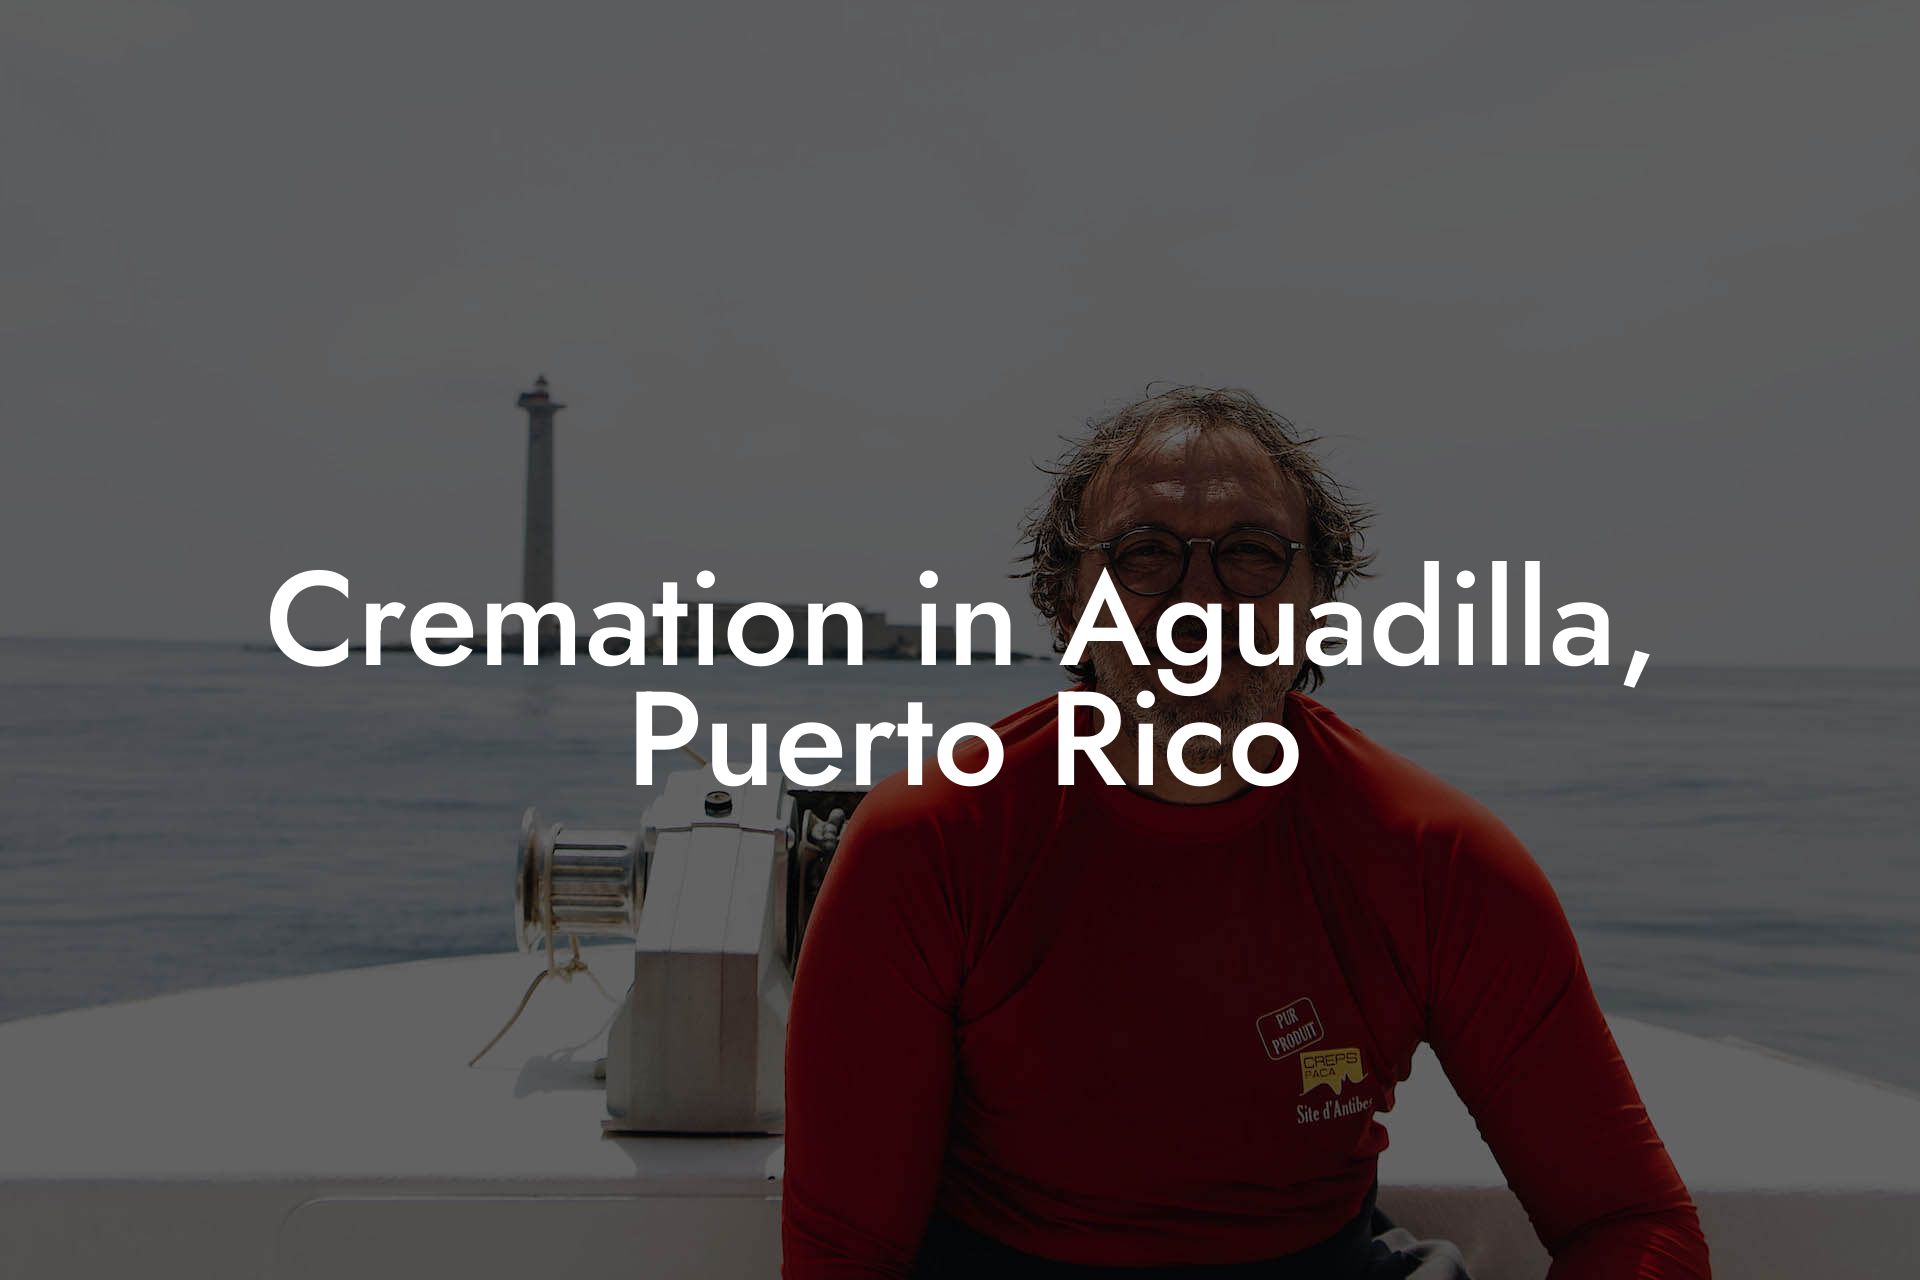 Cremation in Aguadilla, Puerto Rico